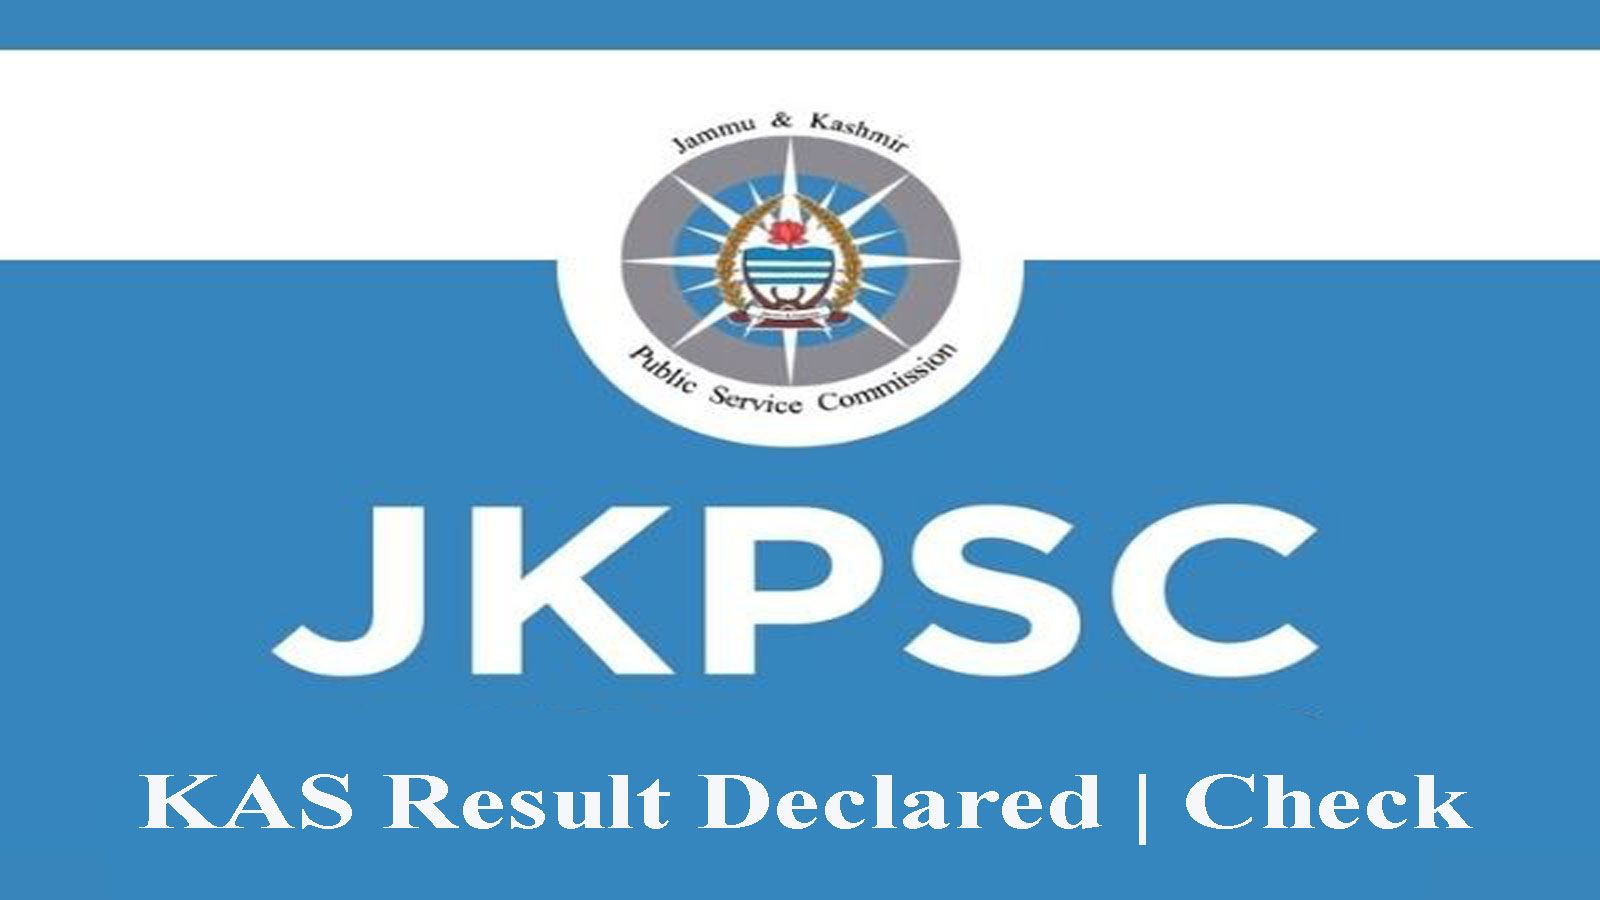 JKPSC declares KAS Mains Result, Check Here